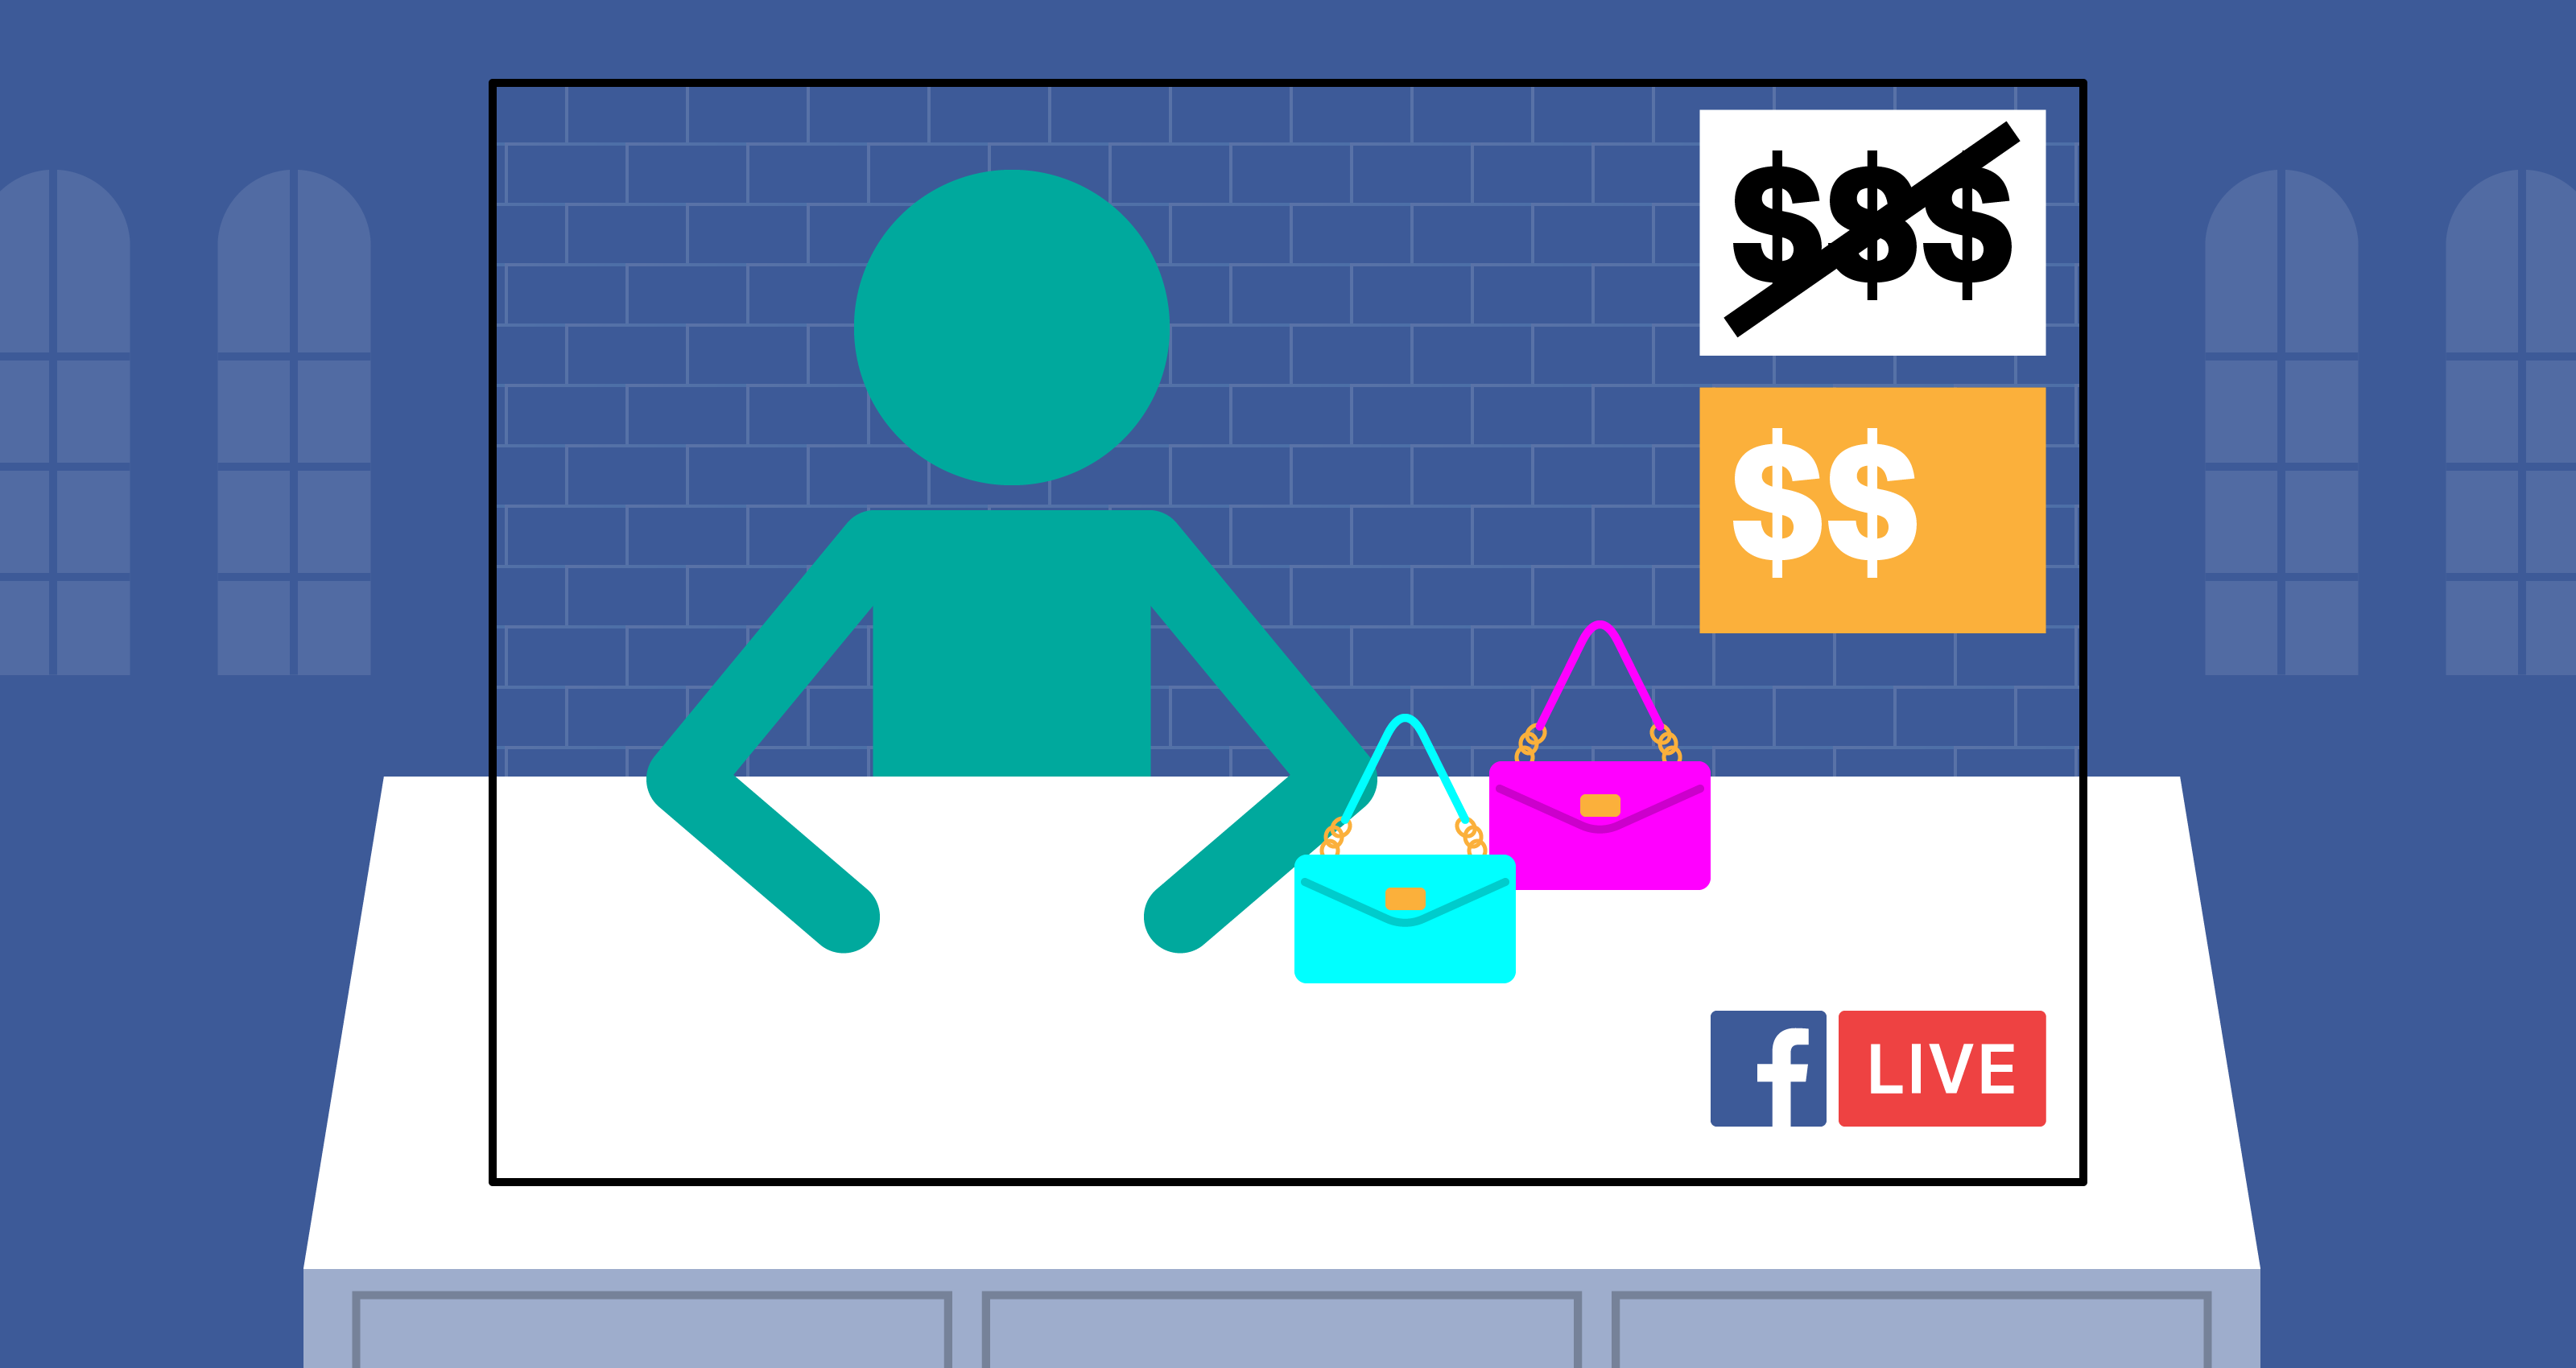 FB QVC? Facebook tries Live video shopping - TechCrunch